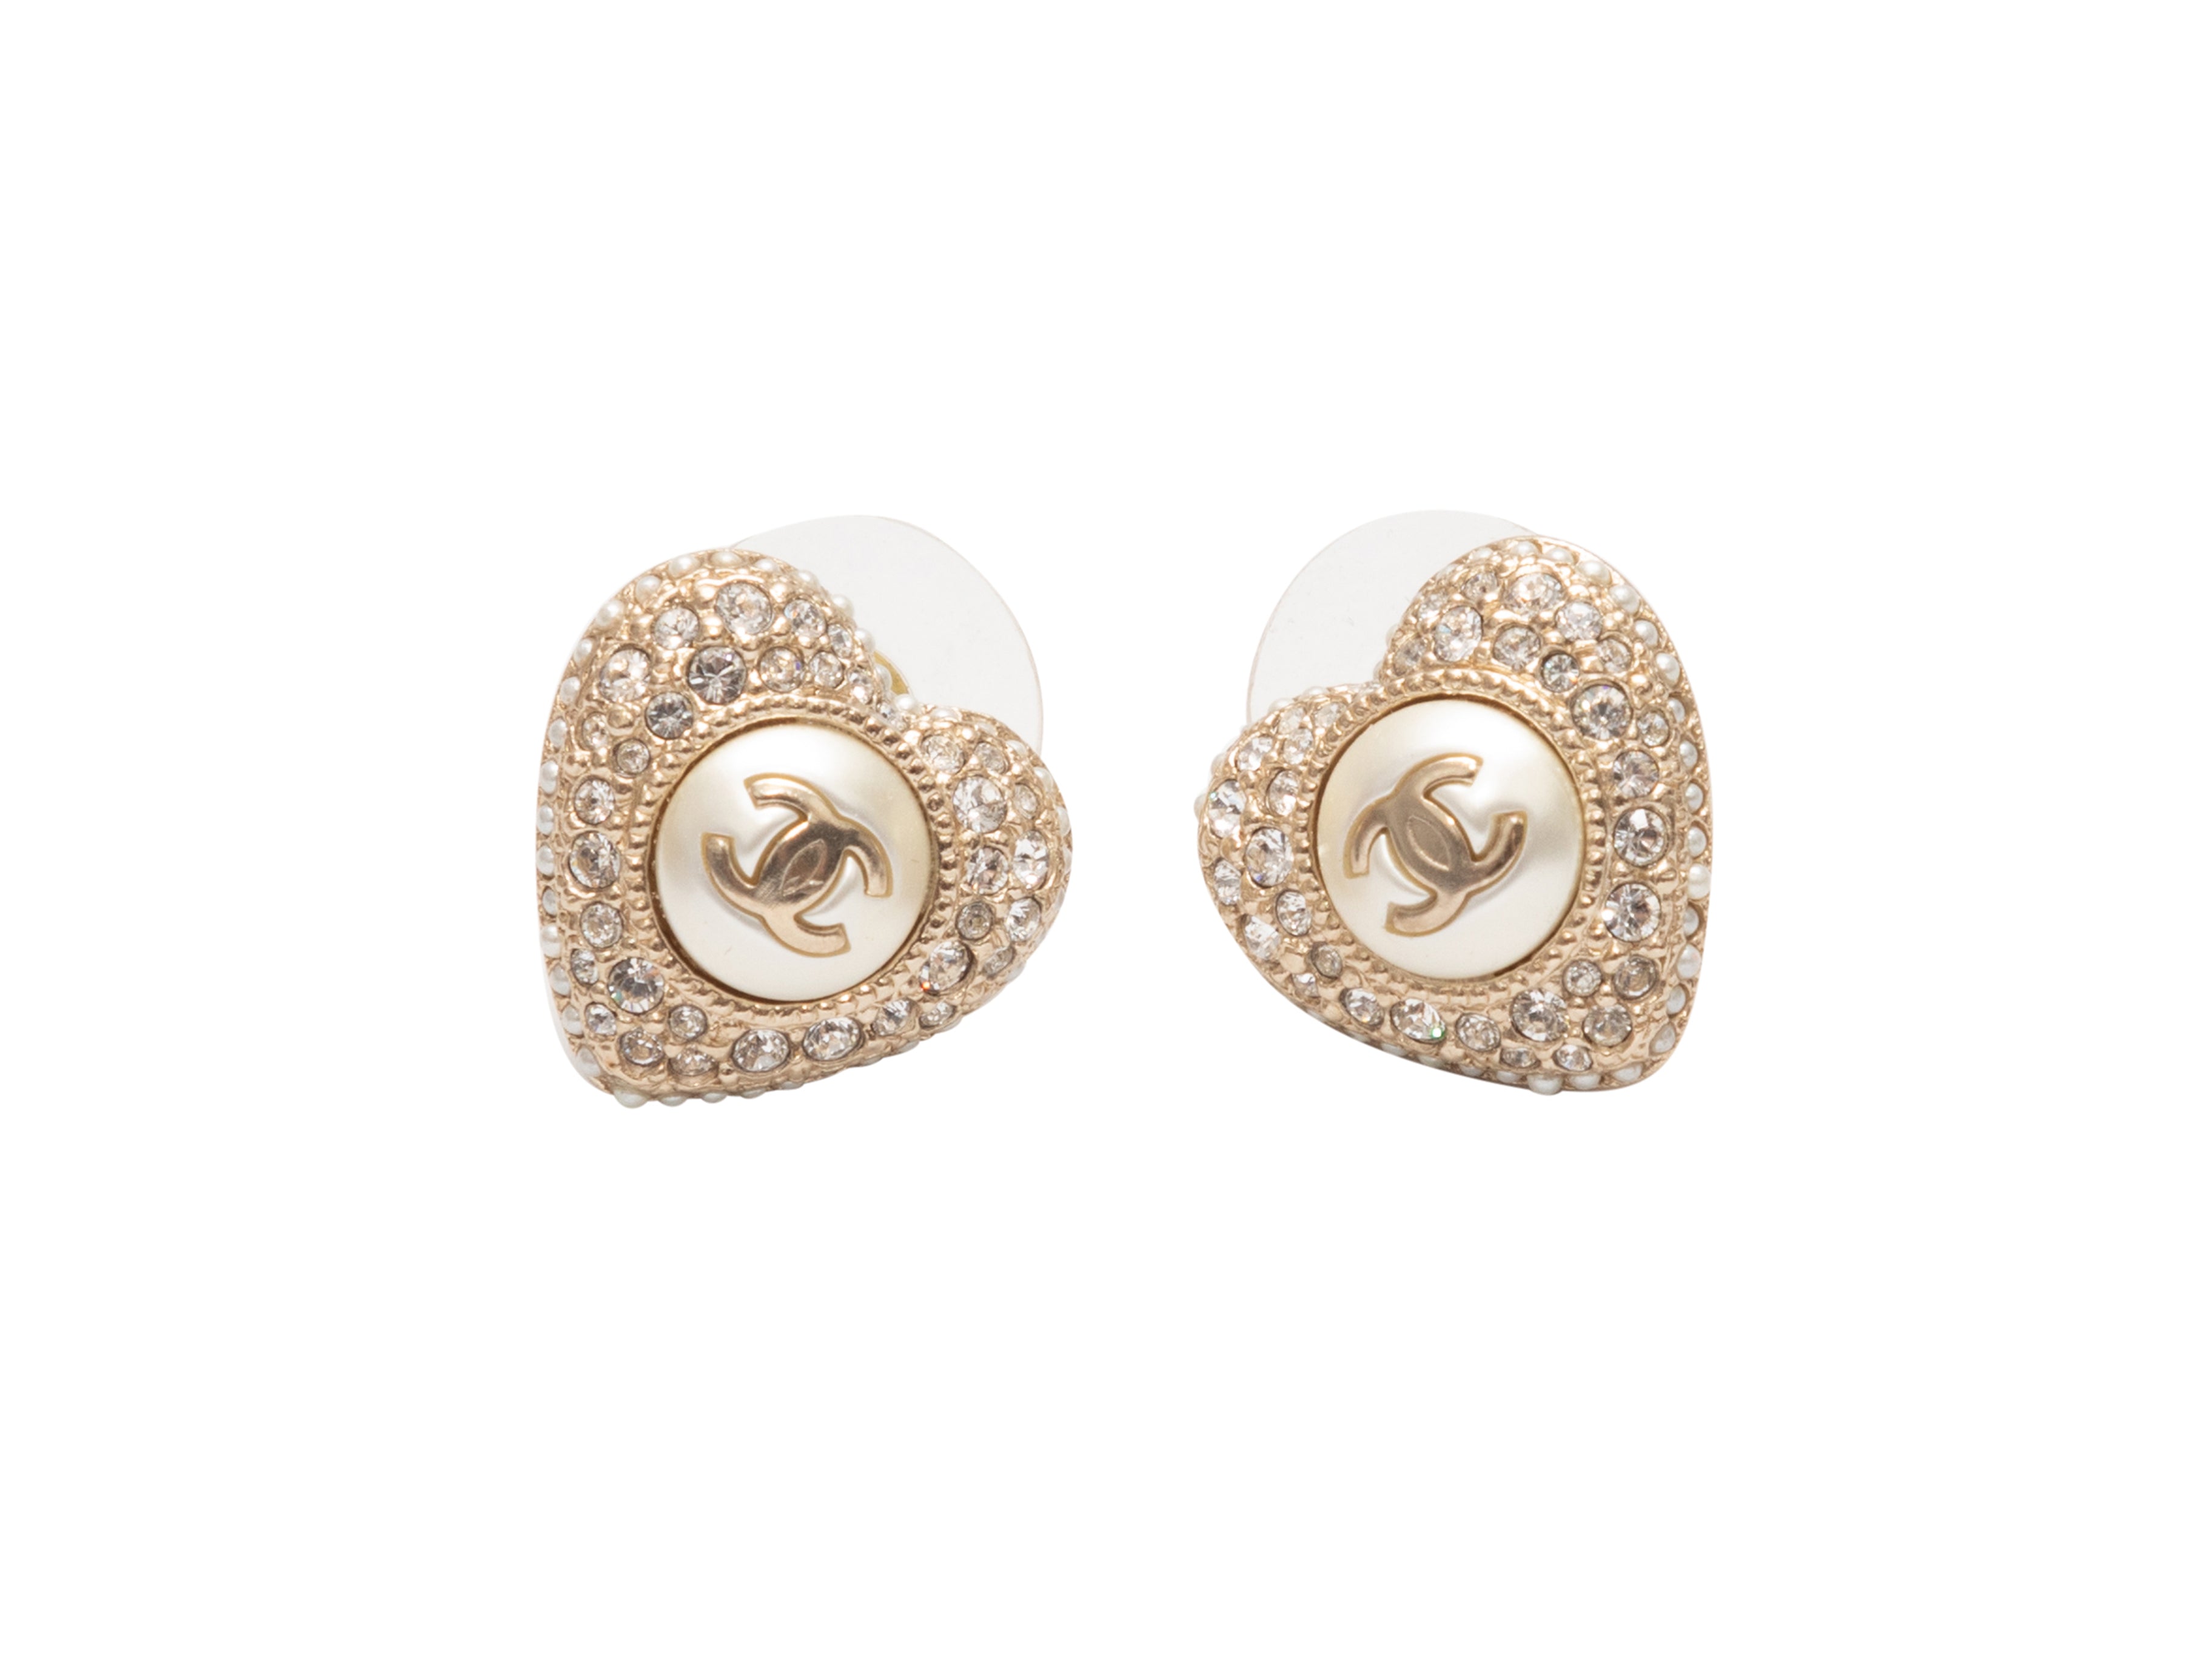 Gold-Tone Chanel Faux Pearl Heart Earrings – Designer Revival